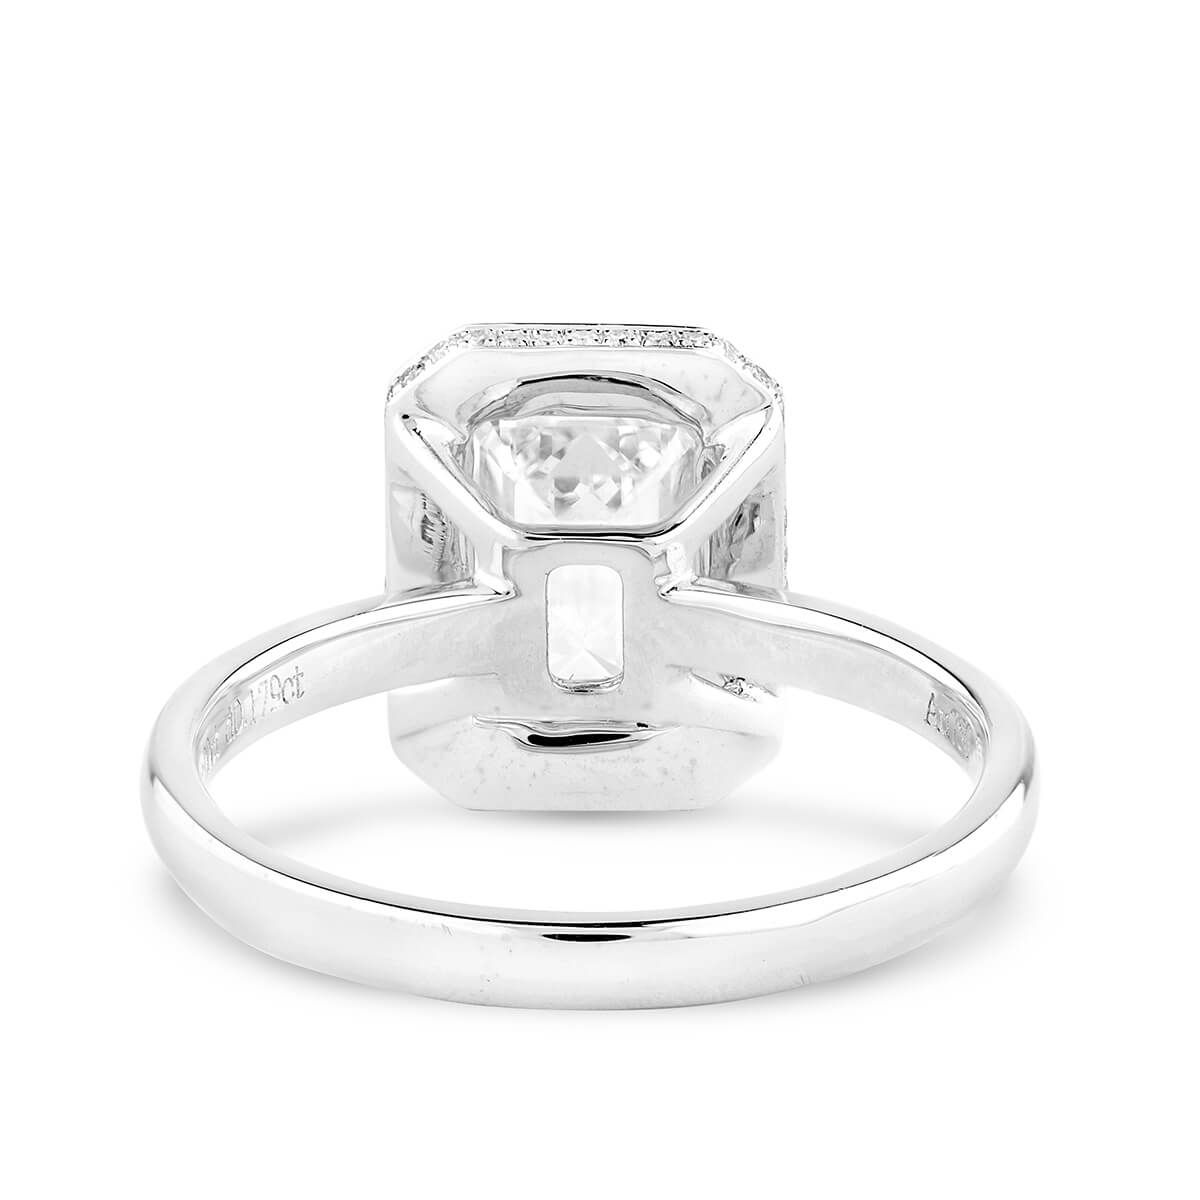  White Diamond Ring, 2.00 Ct. (2.18 Ct. TW), Emerald shape, GIA Certified, 6183663989